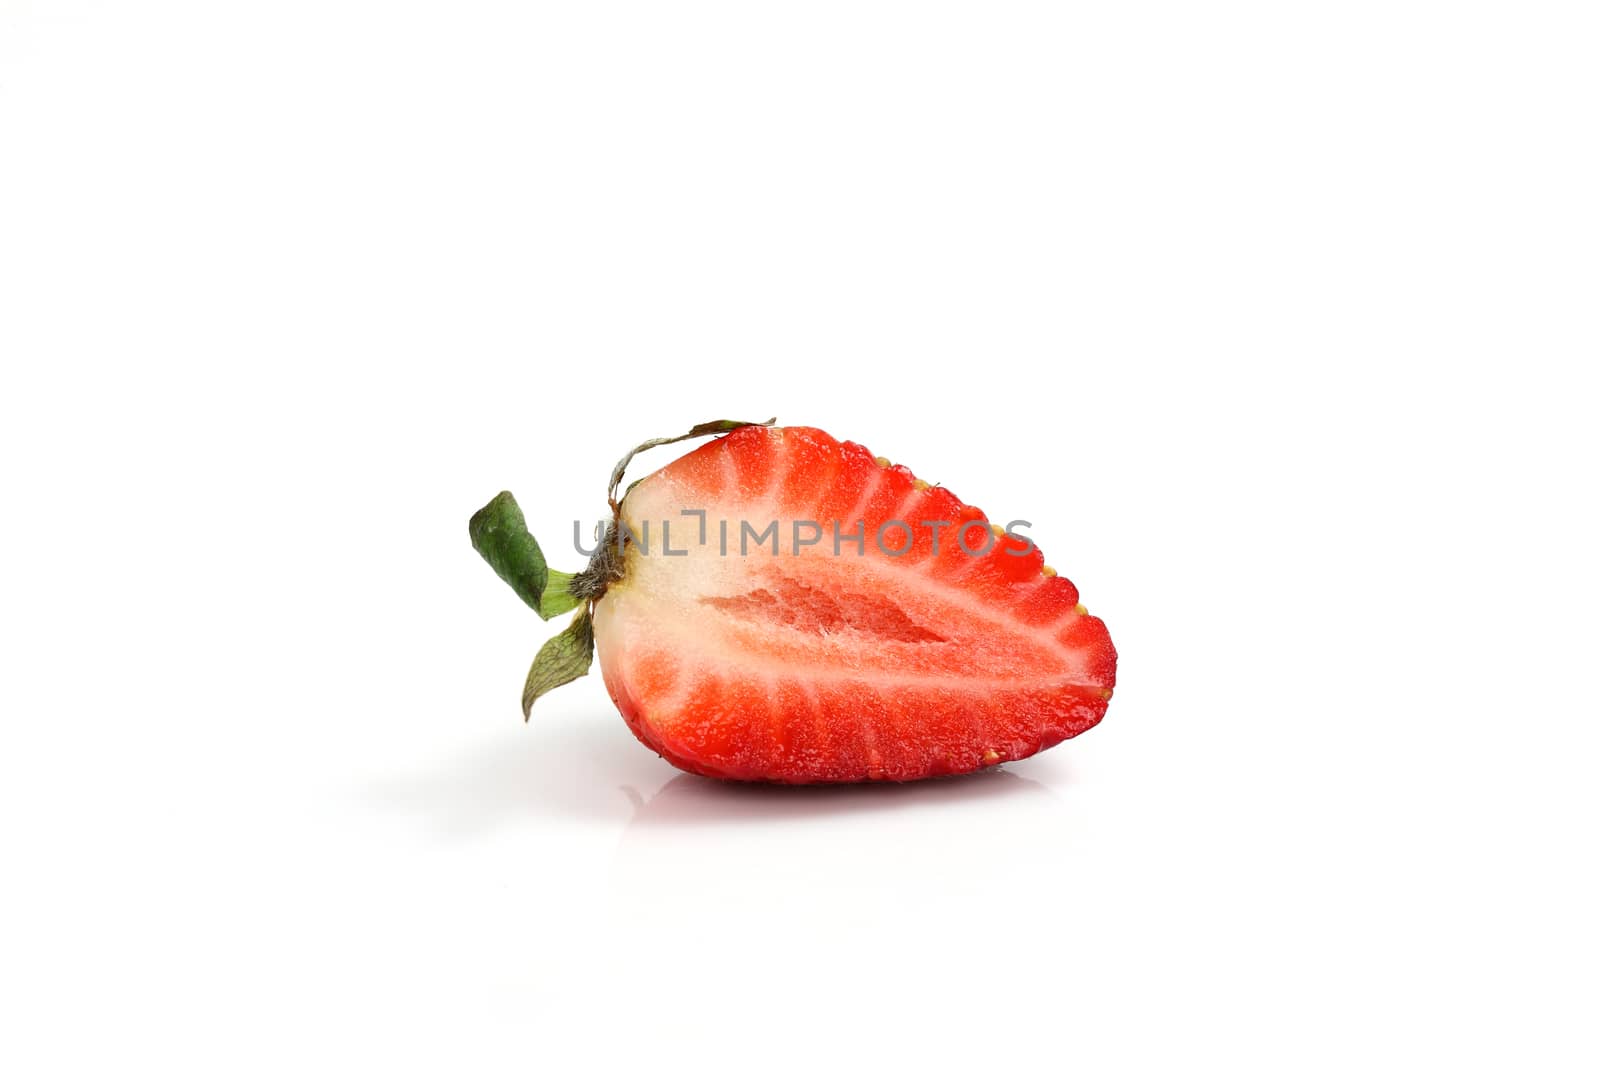 Strawberry isolated in white background by piyato